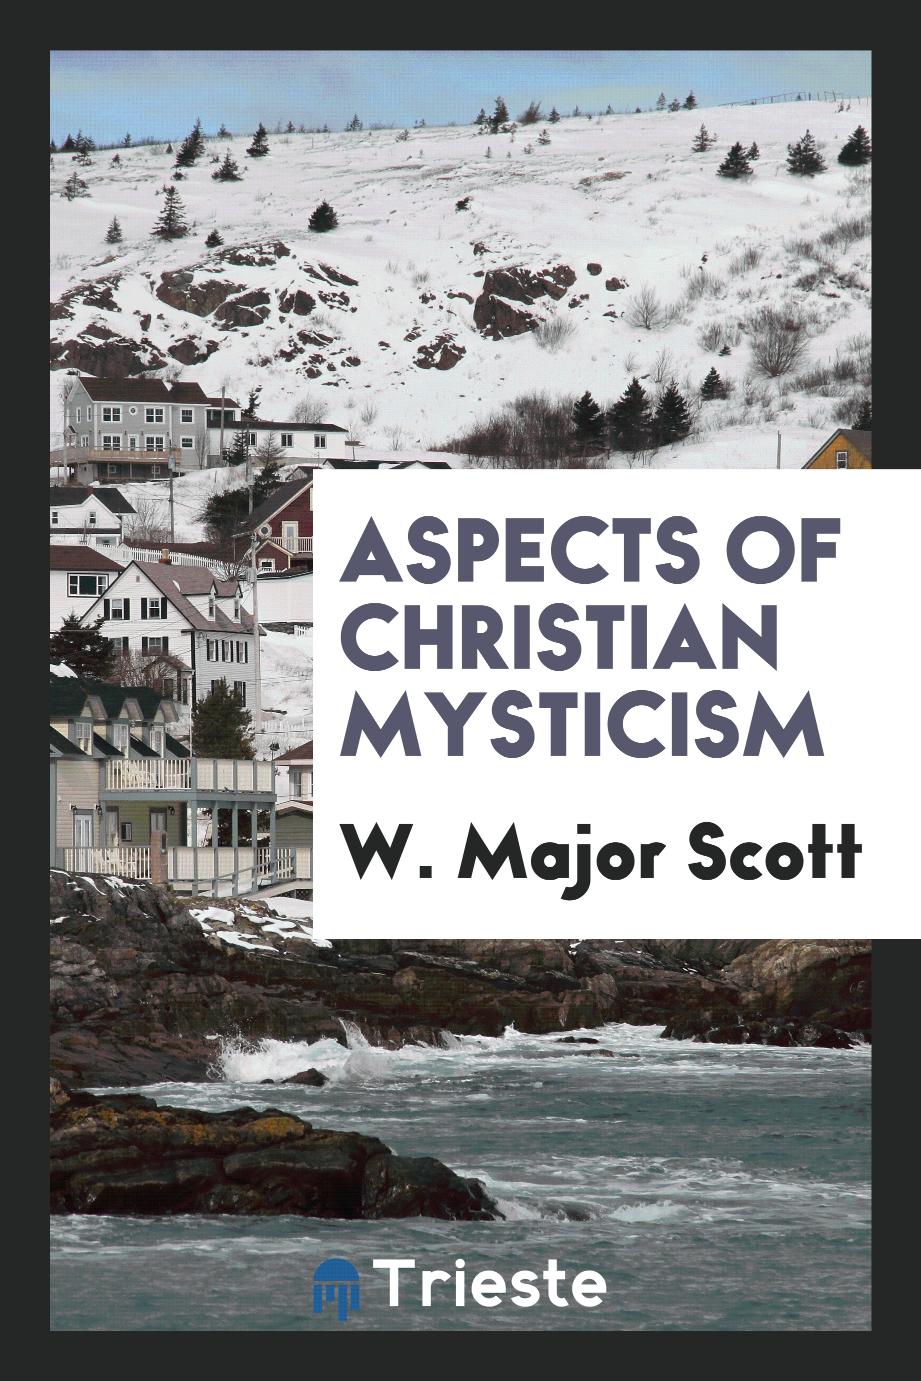 Aspects of Christian Mysticism